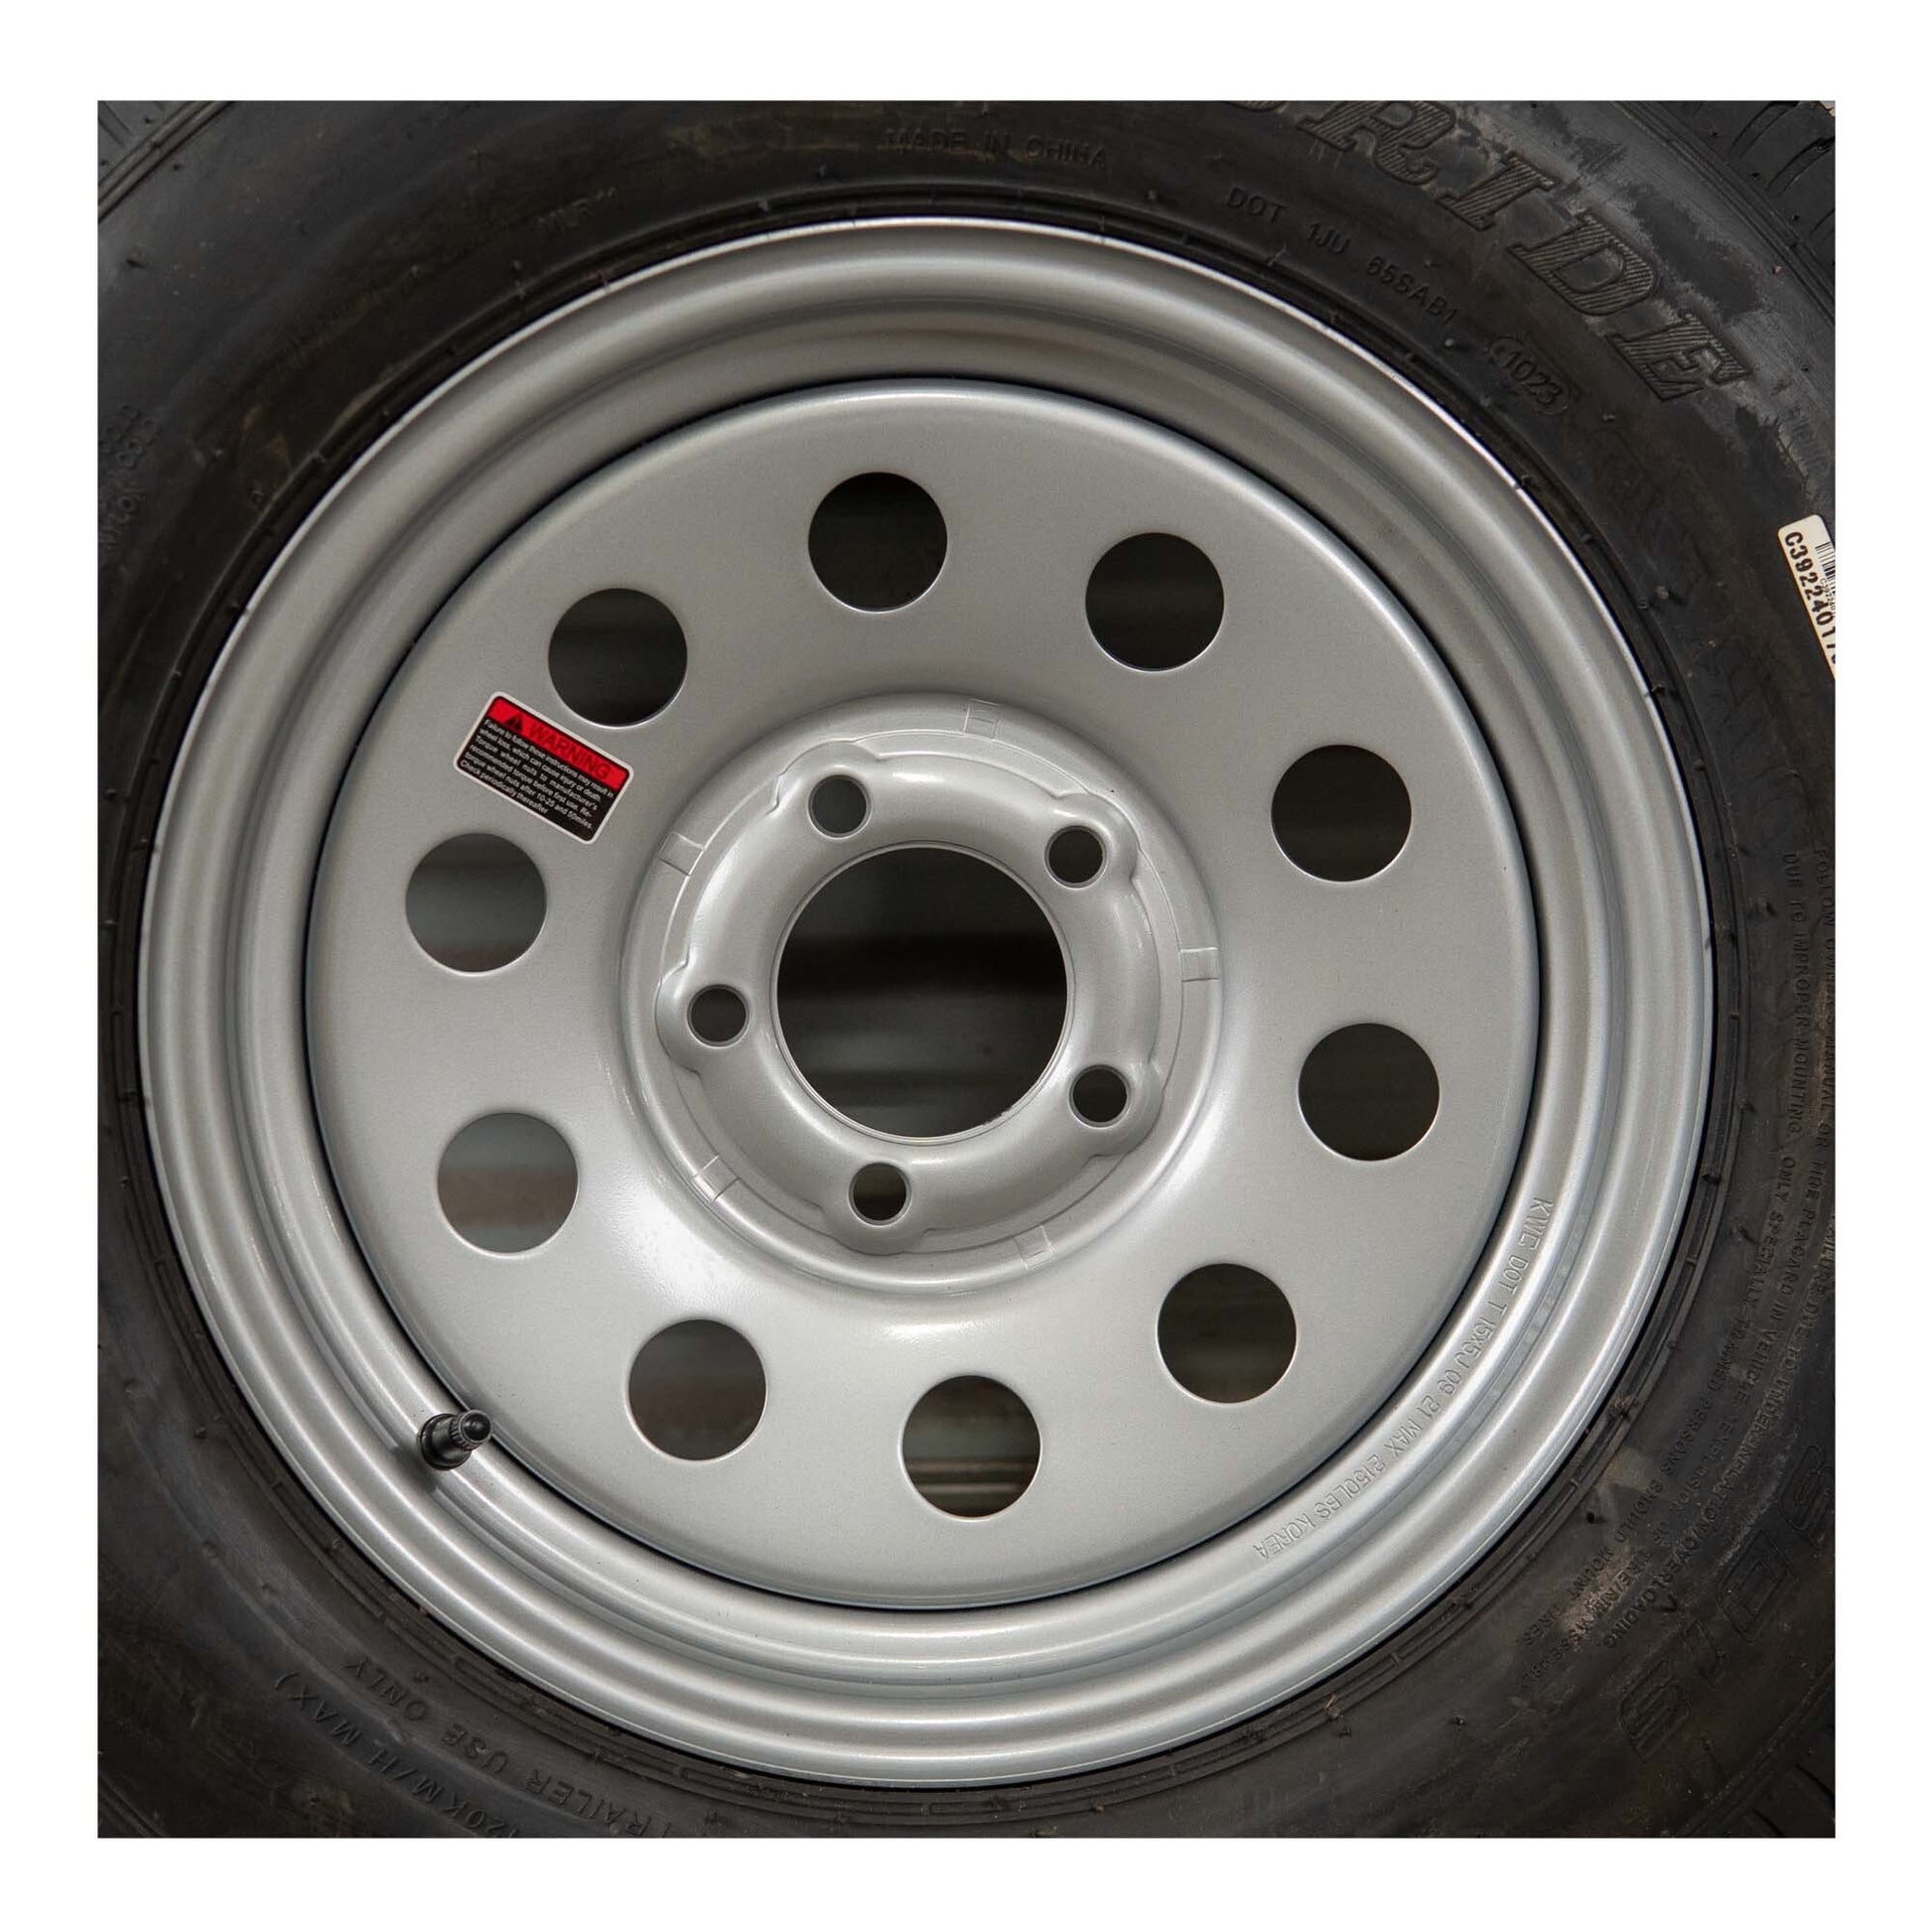 Goodride 15" 6 ply Bias Trailer Tire & Wheel - ST 205/75D15 5x4.5 Lug (Silver Mod) - The Trailer Parts Outlet